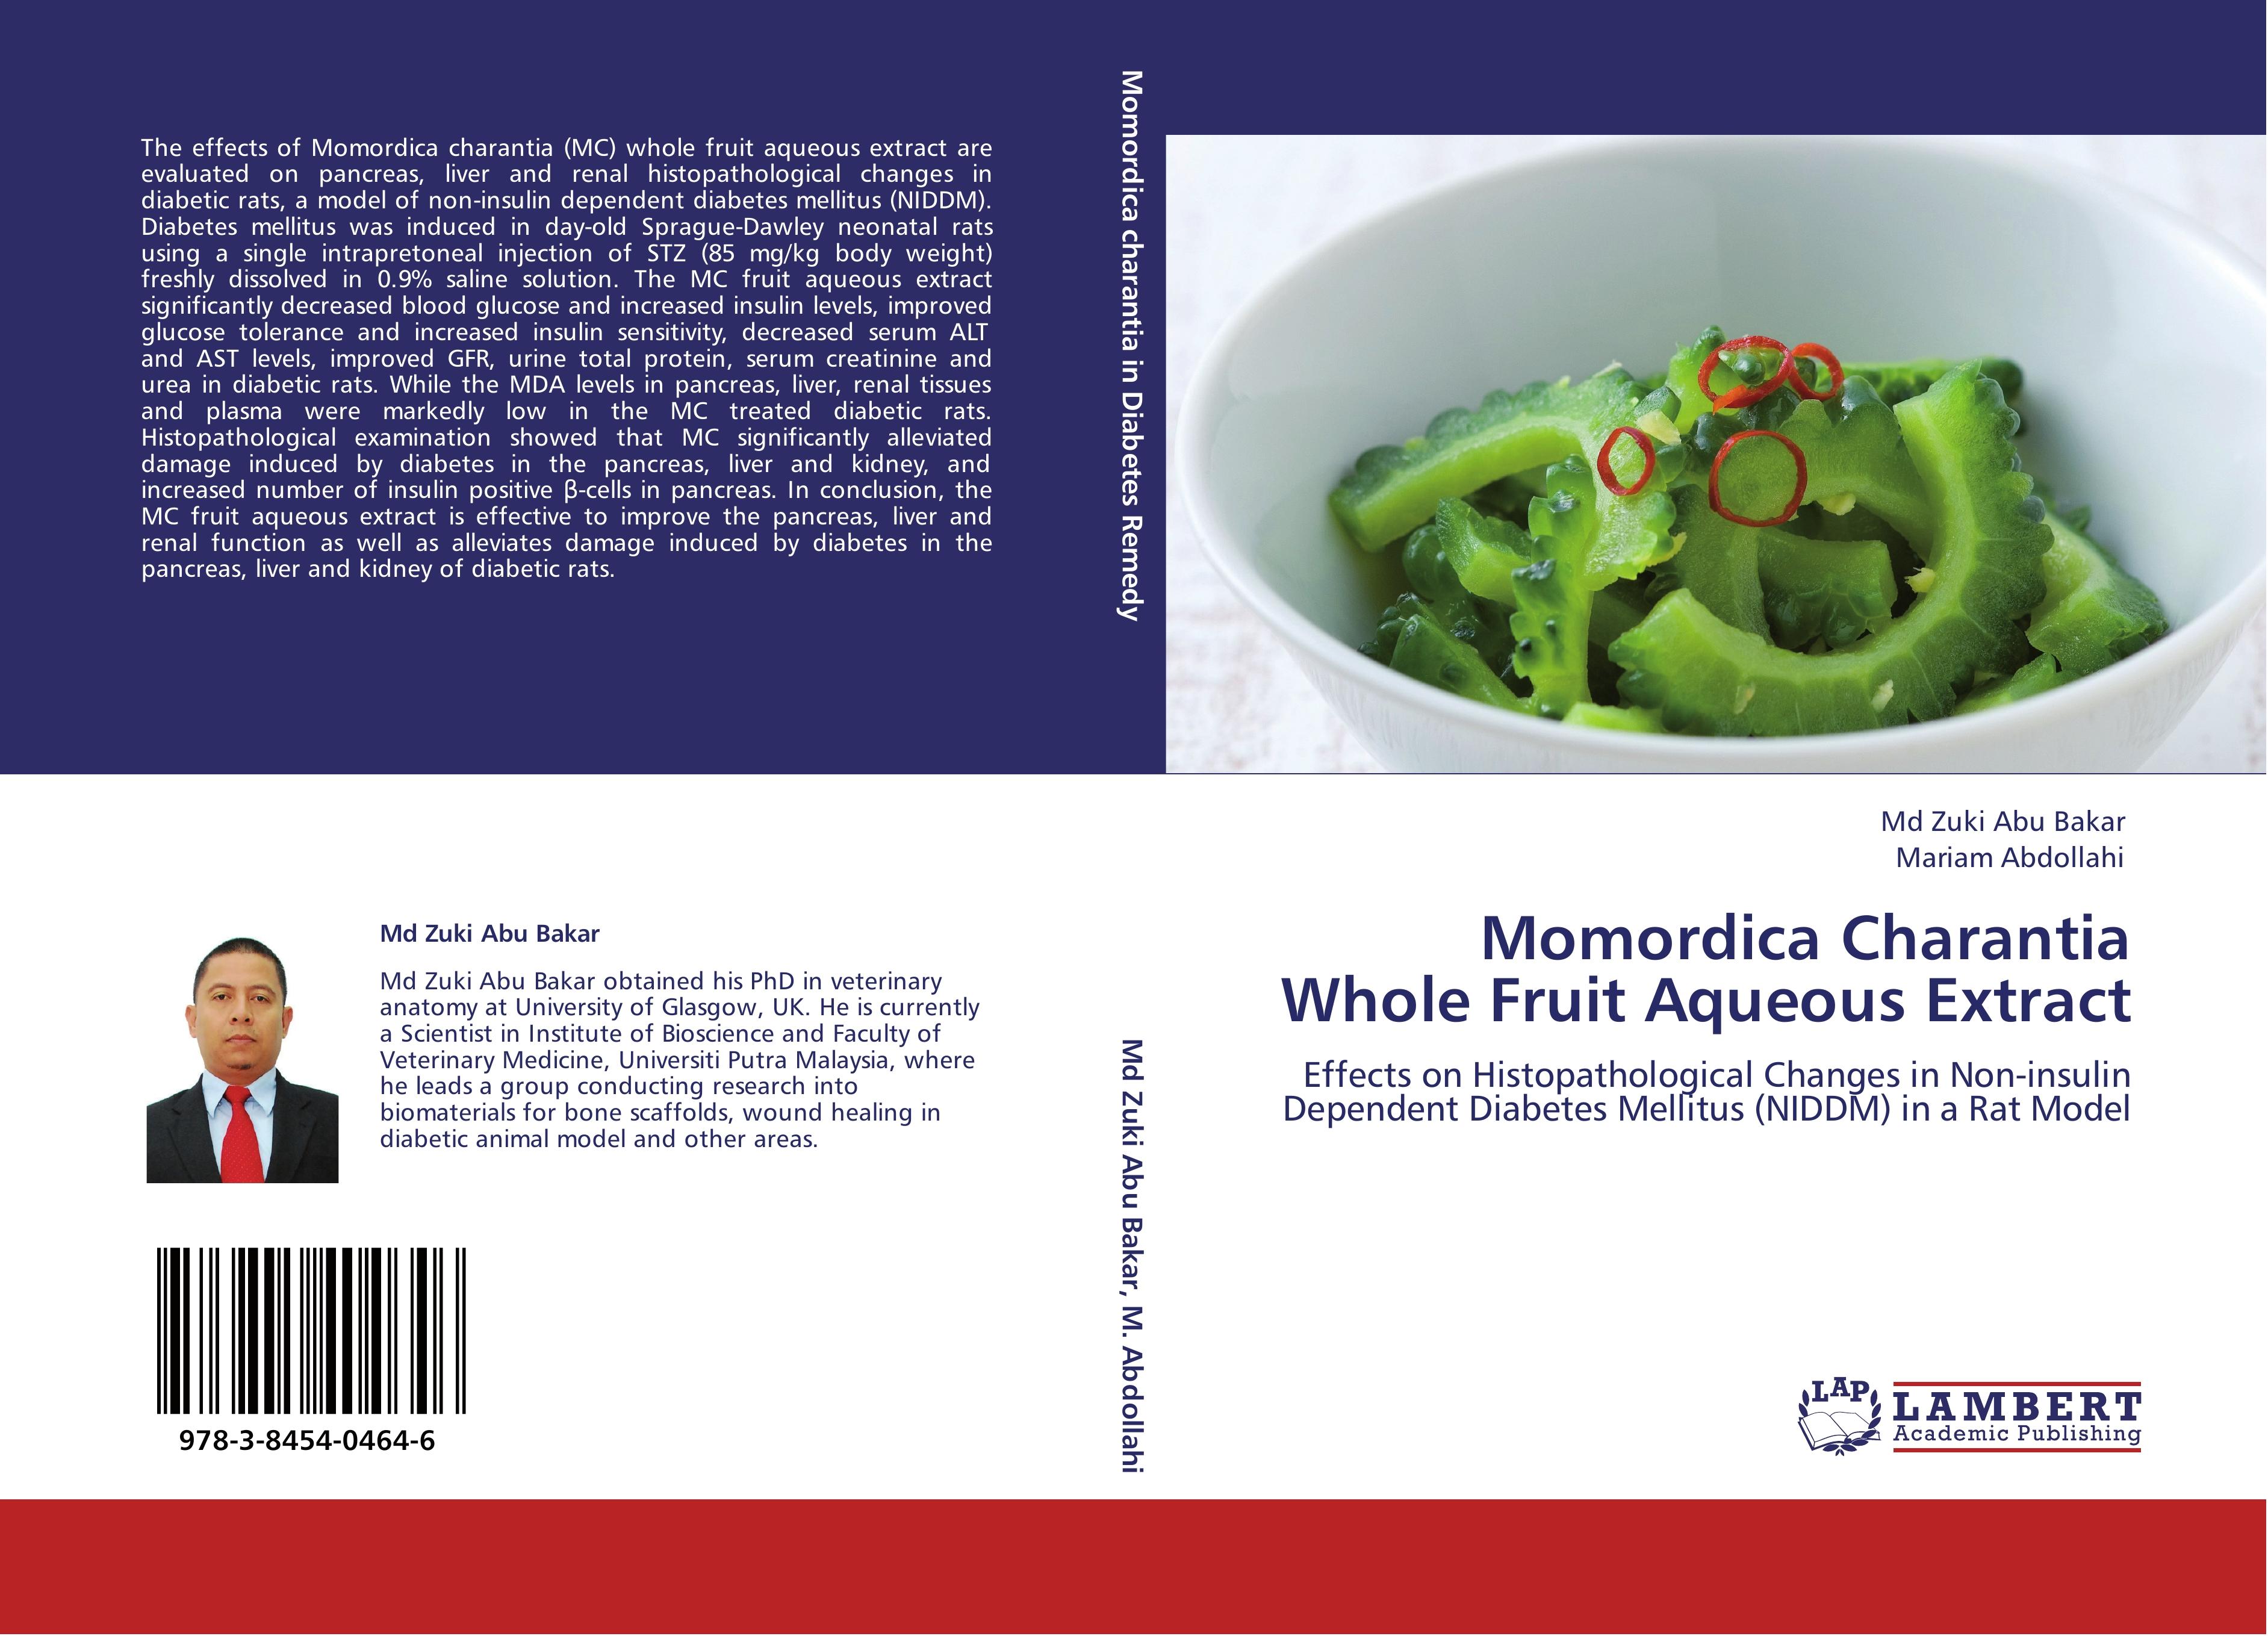 Momordica Charantia Whole Fruit Aqueous Extract - Md Zuki Abu Bakar|Mariam Abdollahi